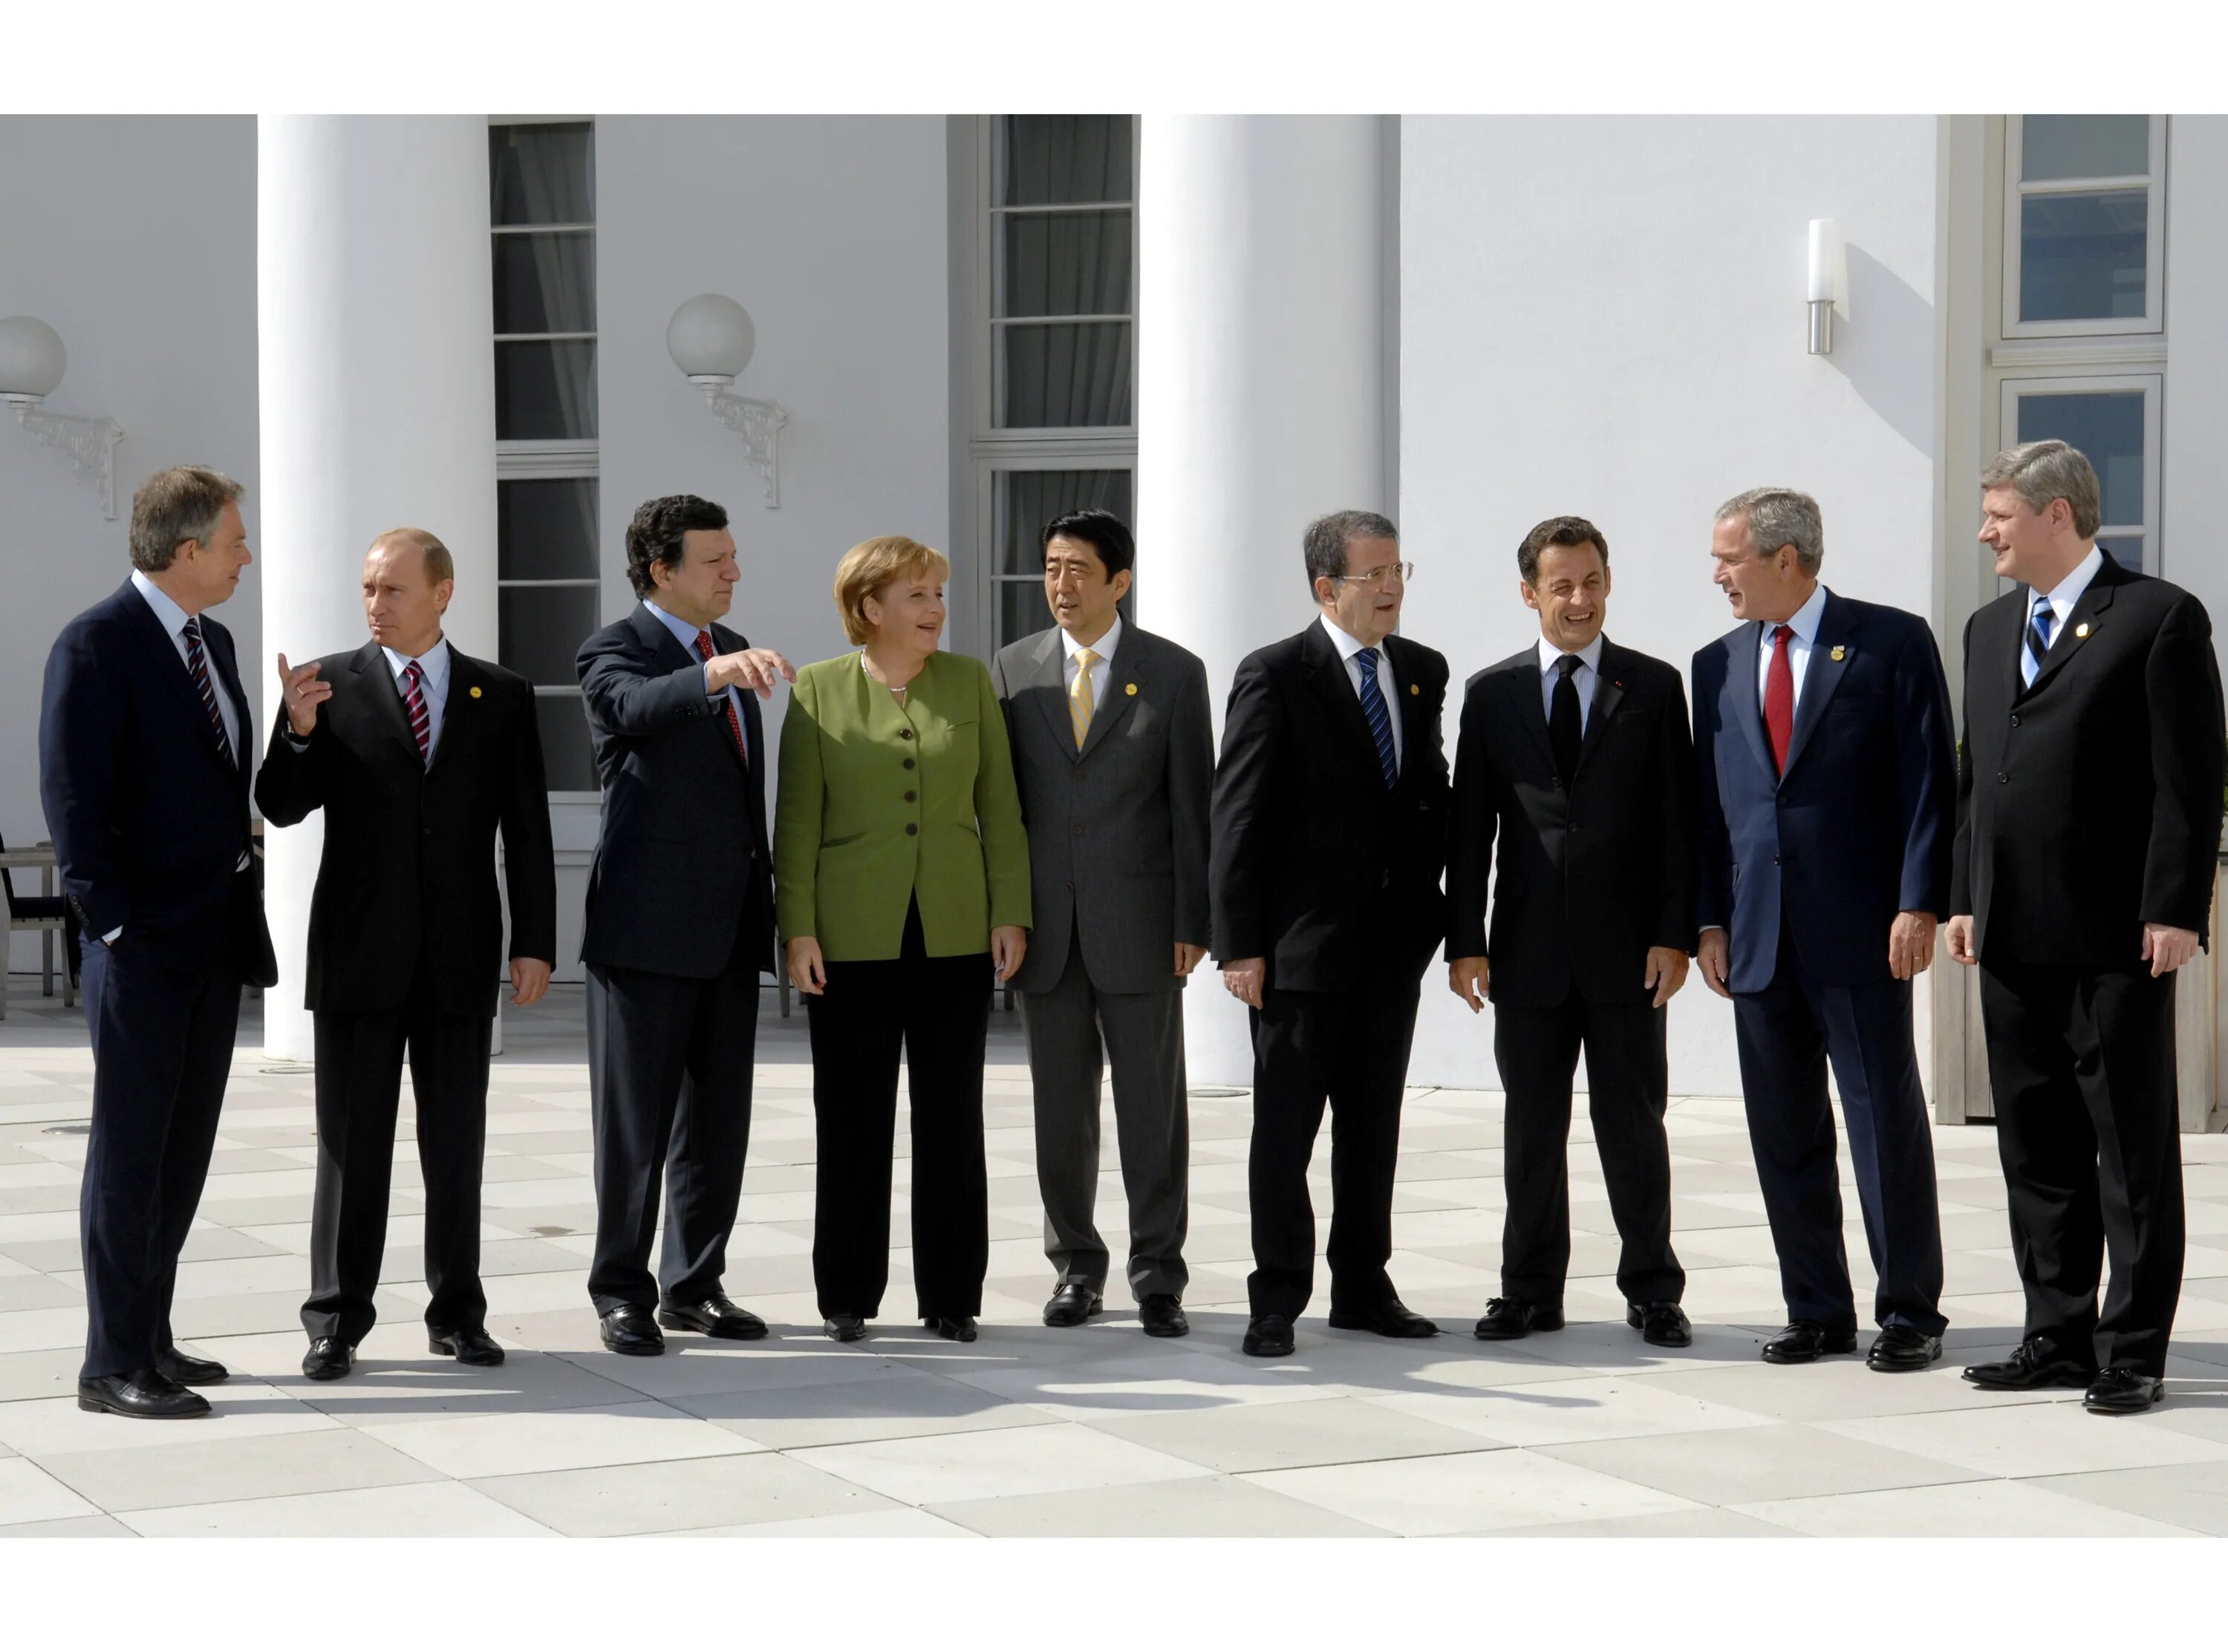 Восьмерка саммит. Summit g8. Саммит g8 2001. Саммит g8 2004. Саммит большой восьмерки 2004.